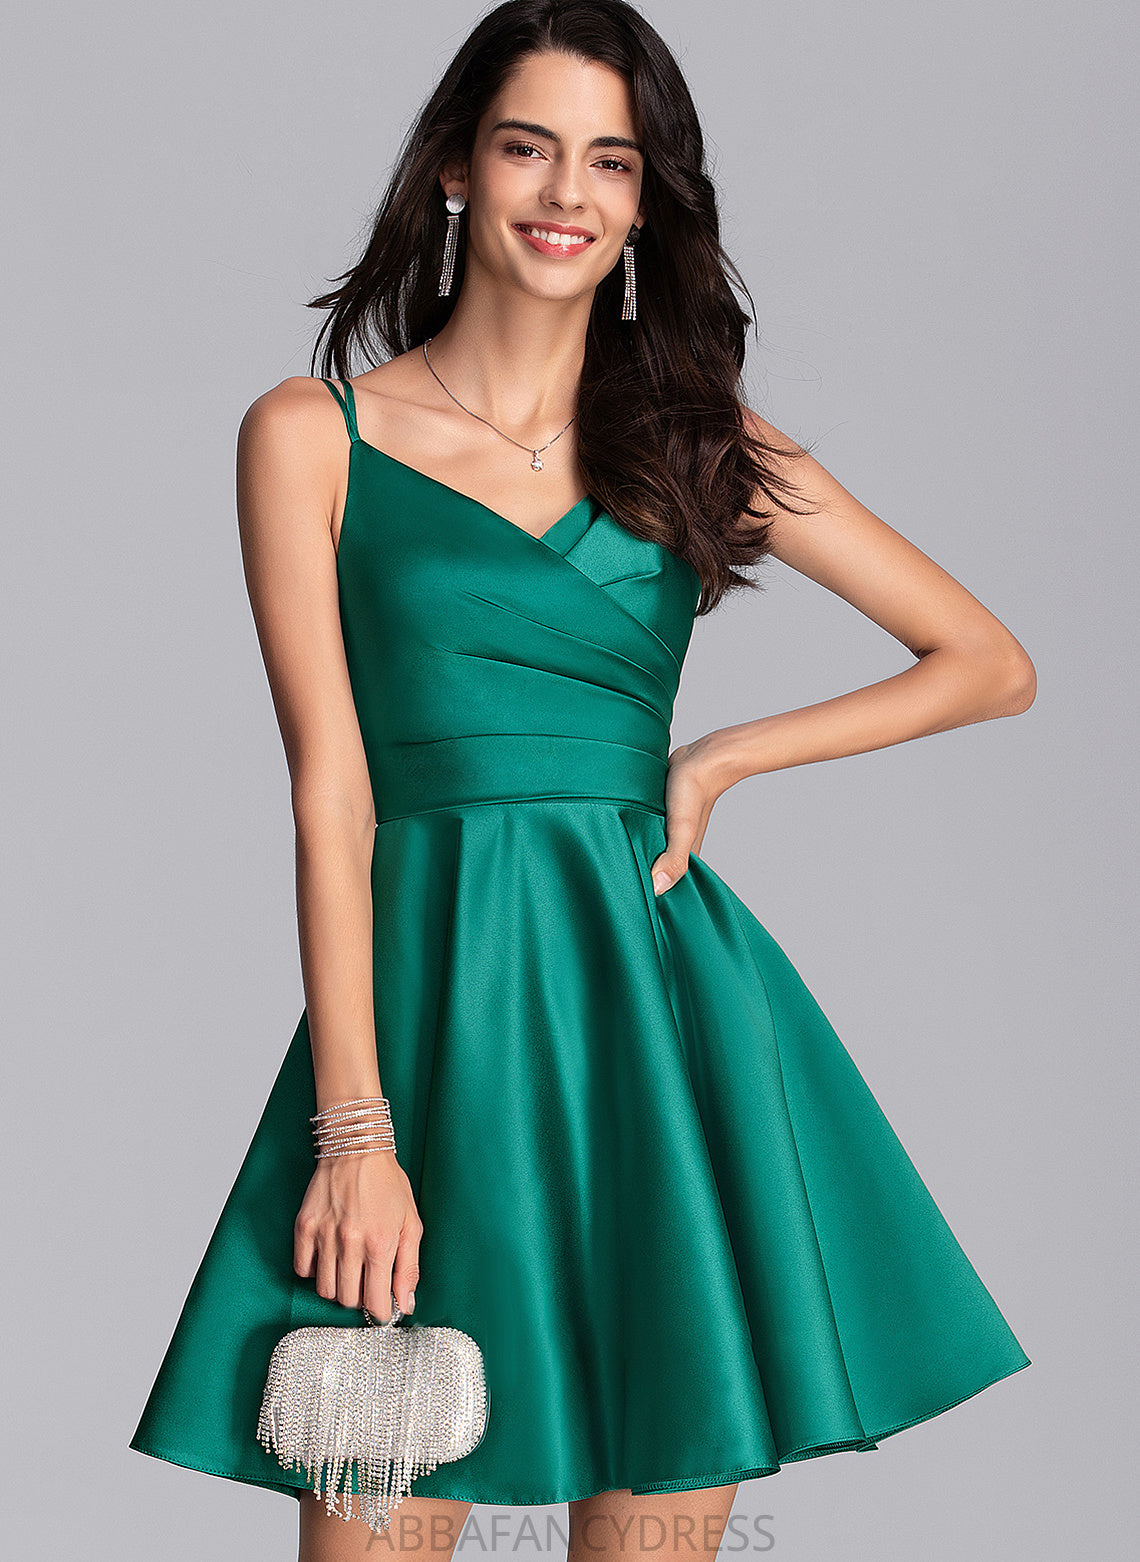 Ruffle Karma Prom Dresses Pockets Short/Mini With V-neck Satin A-Line